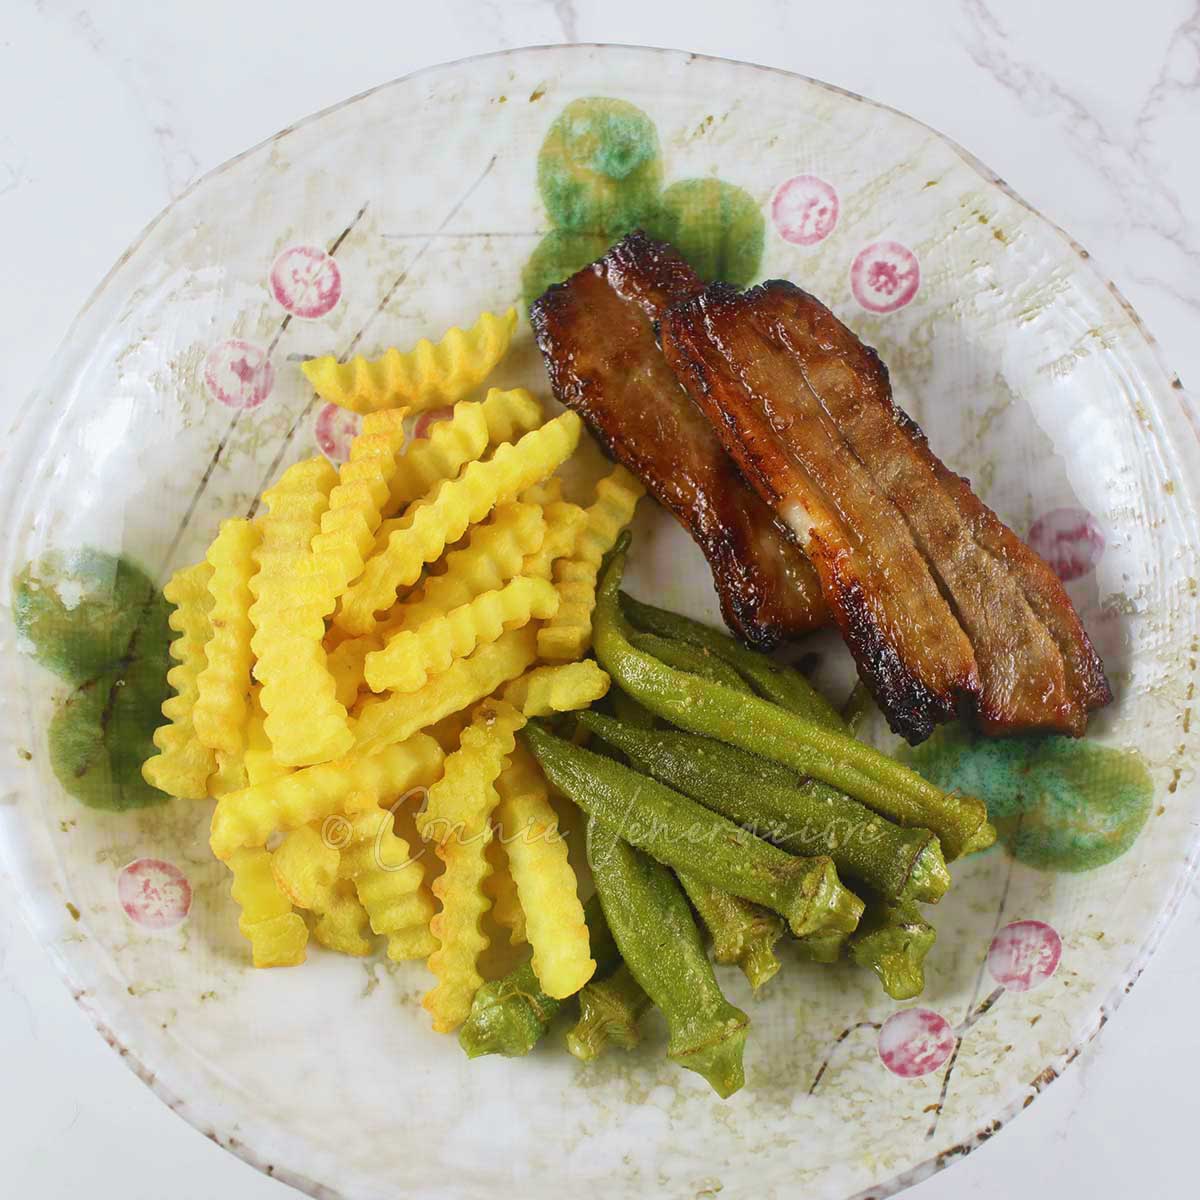 Steamed okra, fries and pork bulgogi on plate